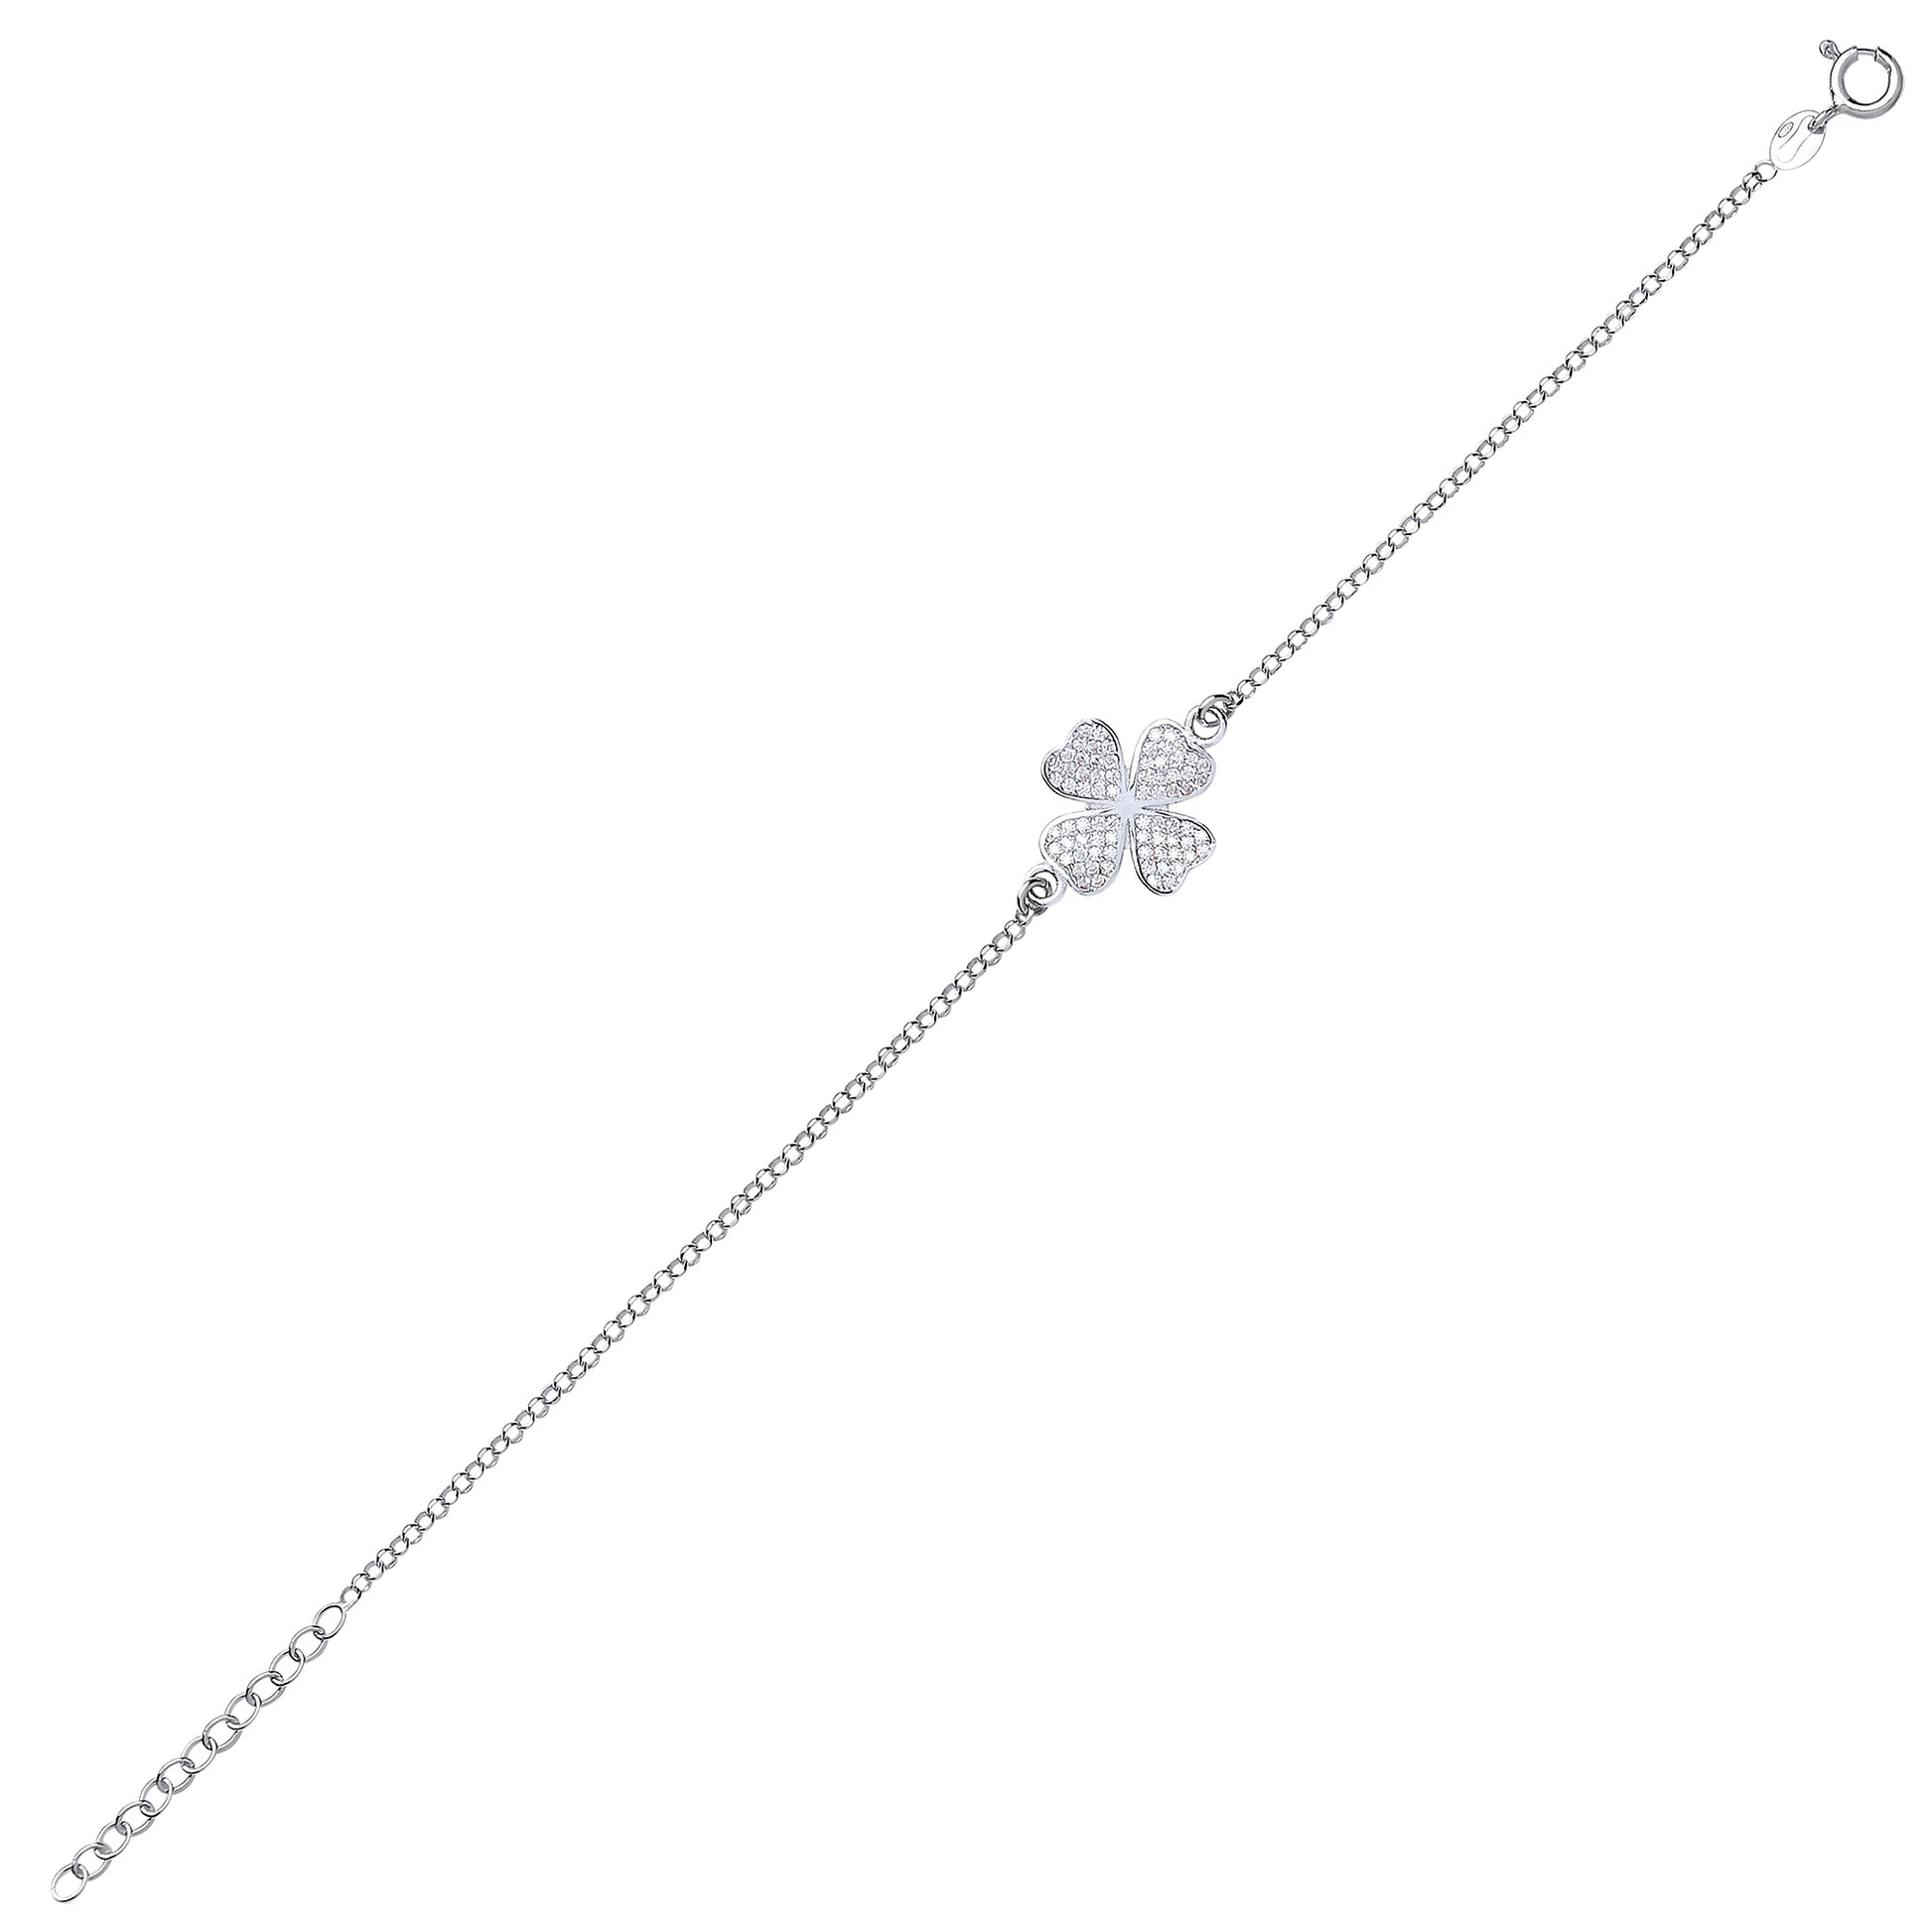 Silver  CZ Lucky 4 Leaf Clover Charm Bracelet - GVB364RH